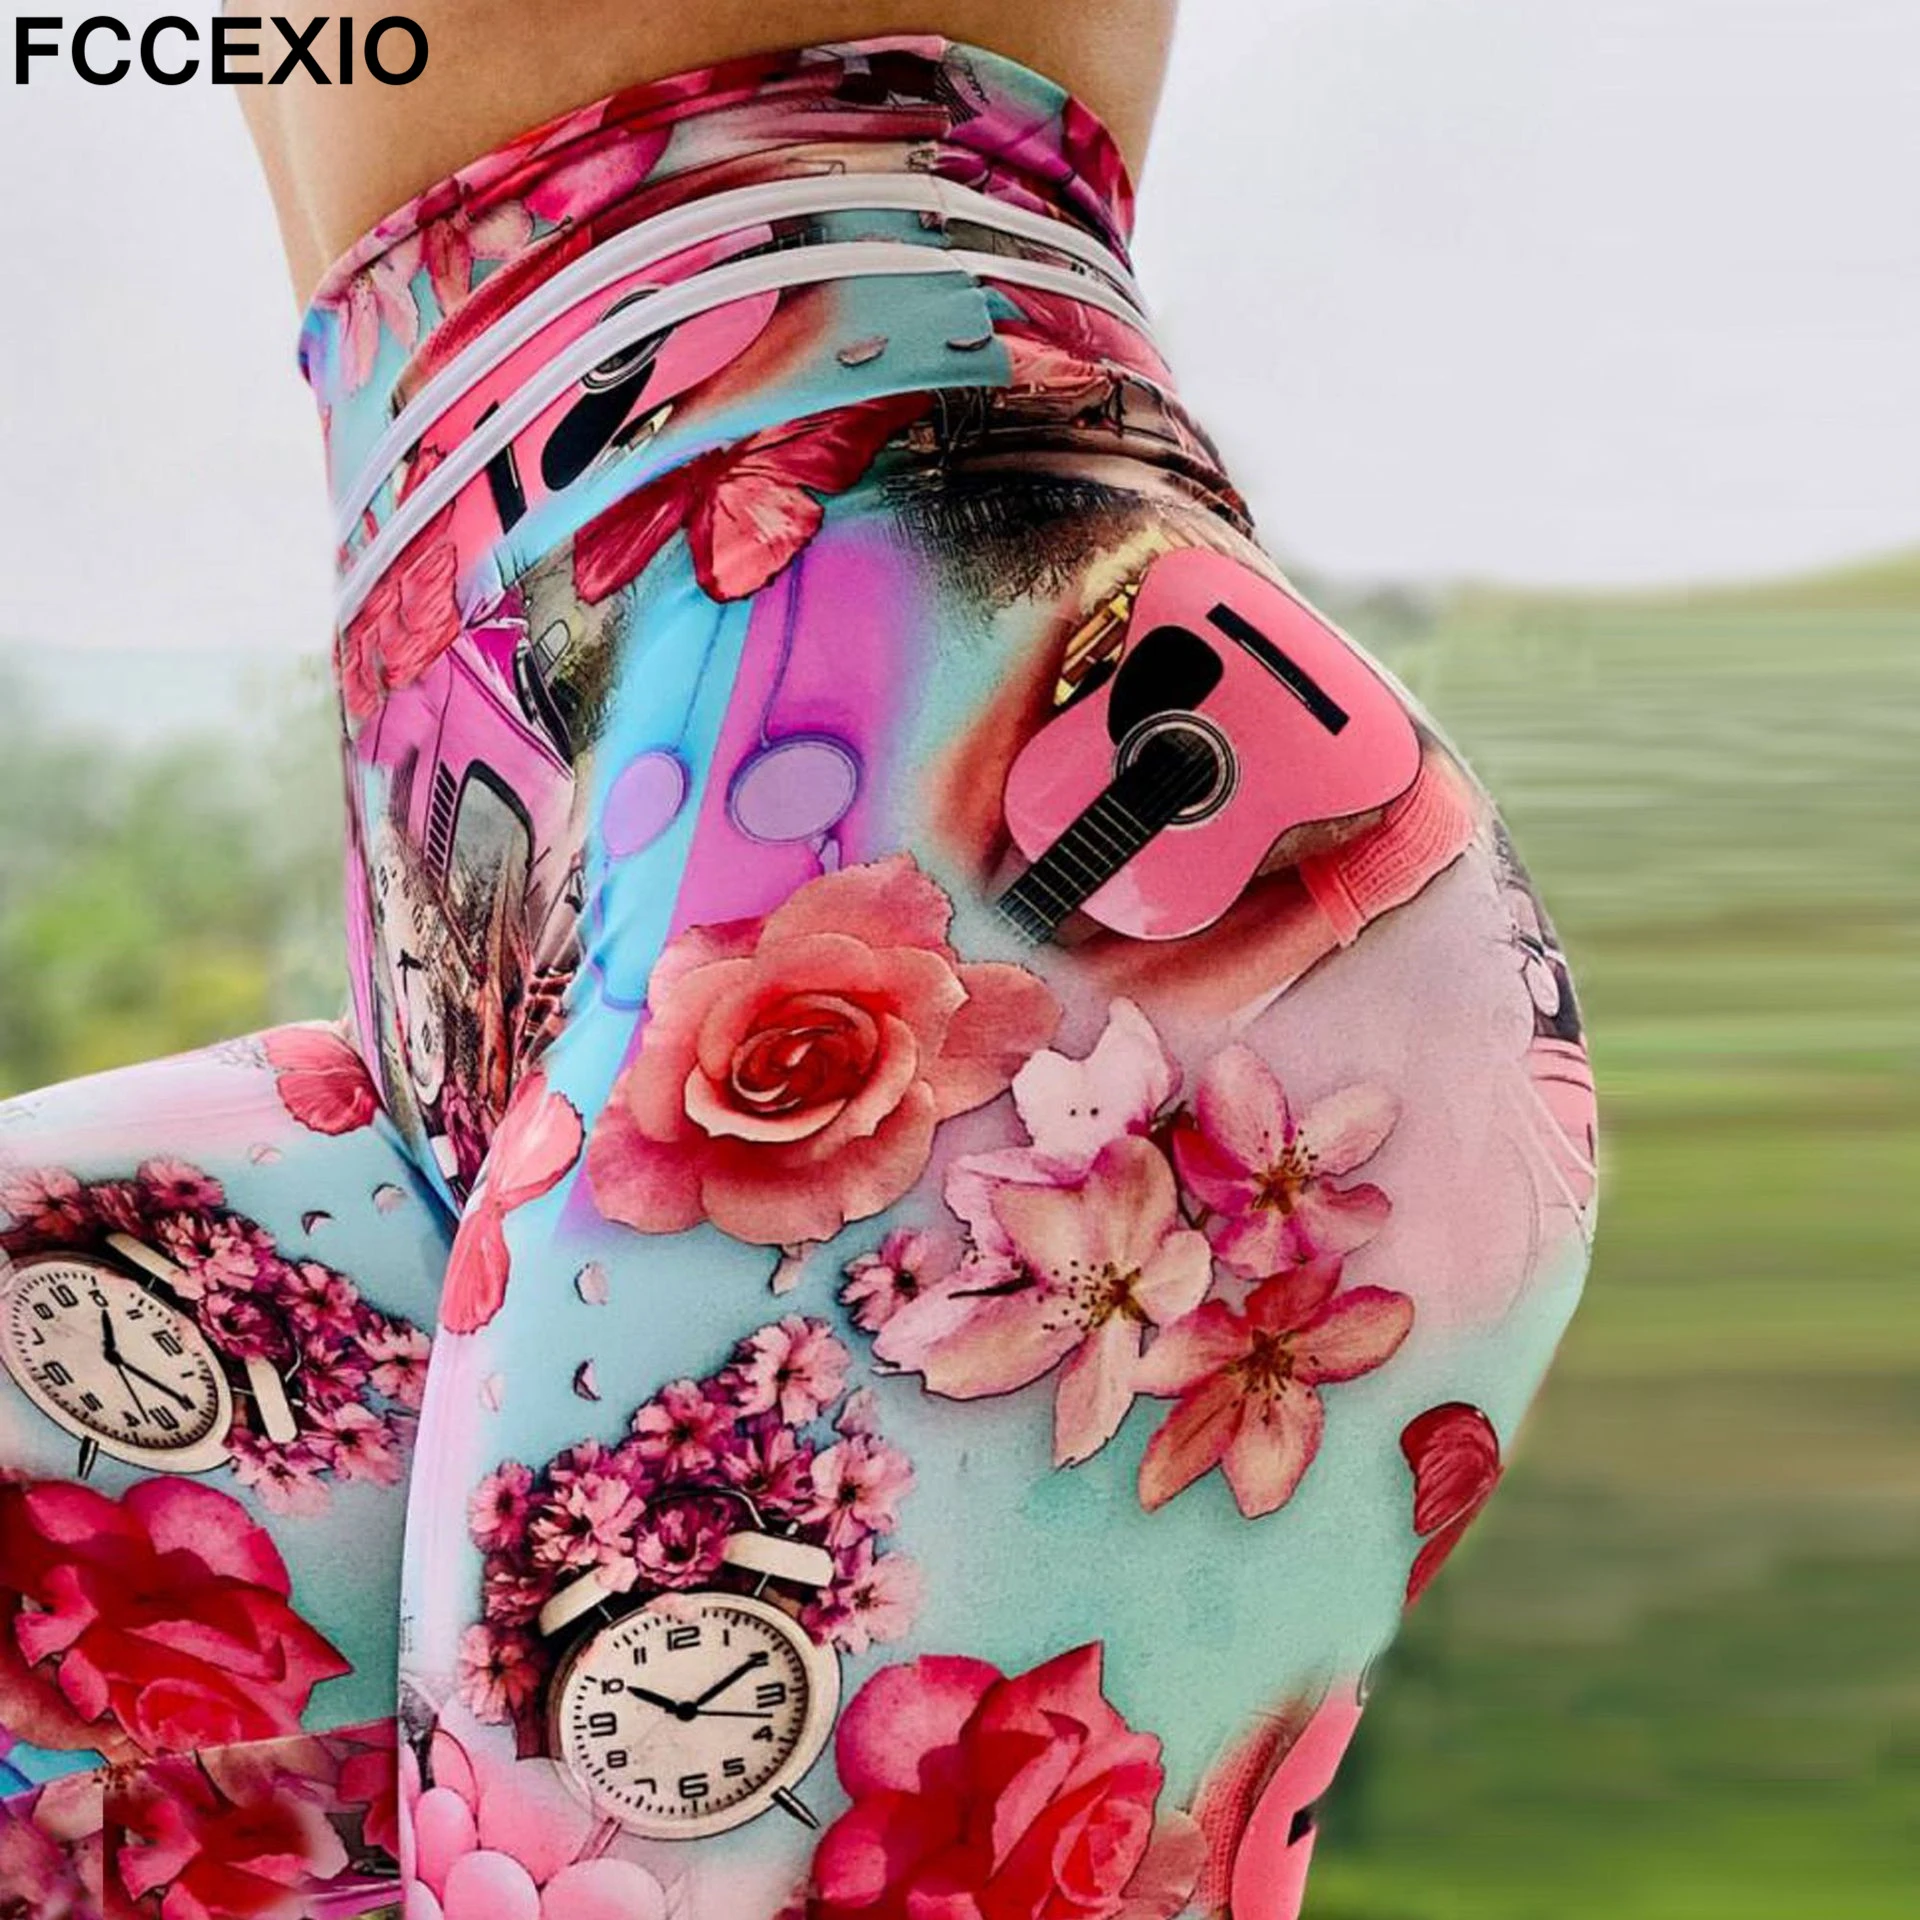 FCCEXIO 3D Print Women Leggings Pink Guitar Clock Tight Fitness Legins High Waist Long Pants Fashion Sexy Sporting Leggins lululemon align leggings Leggings